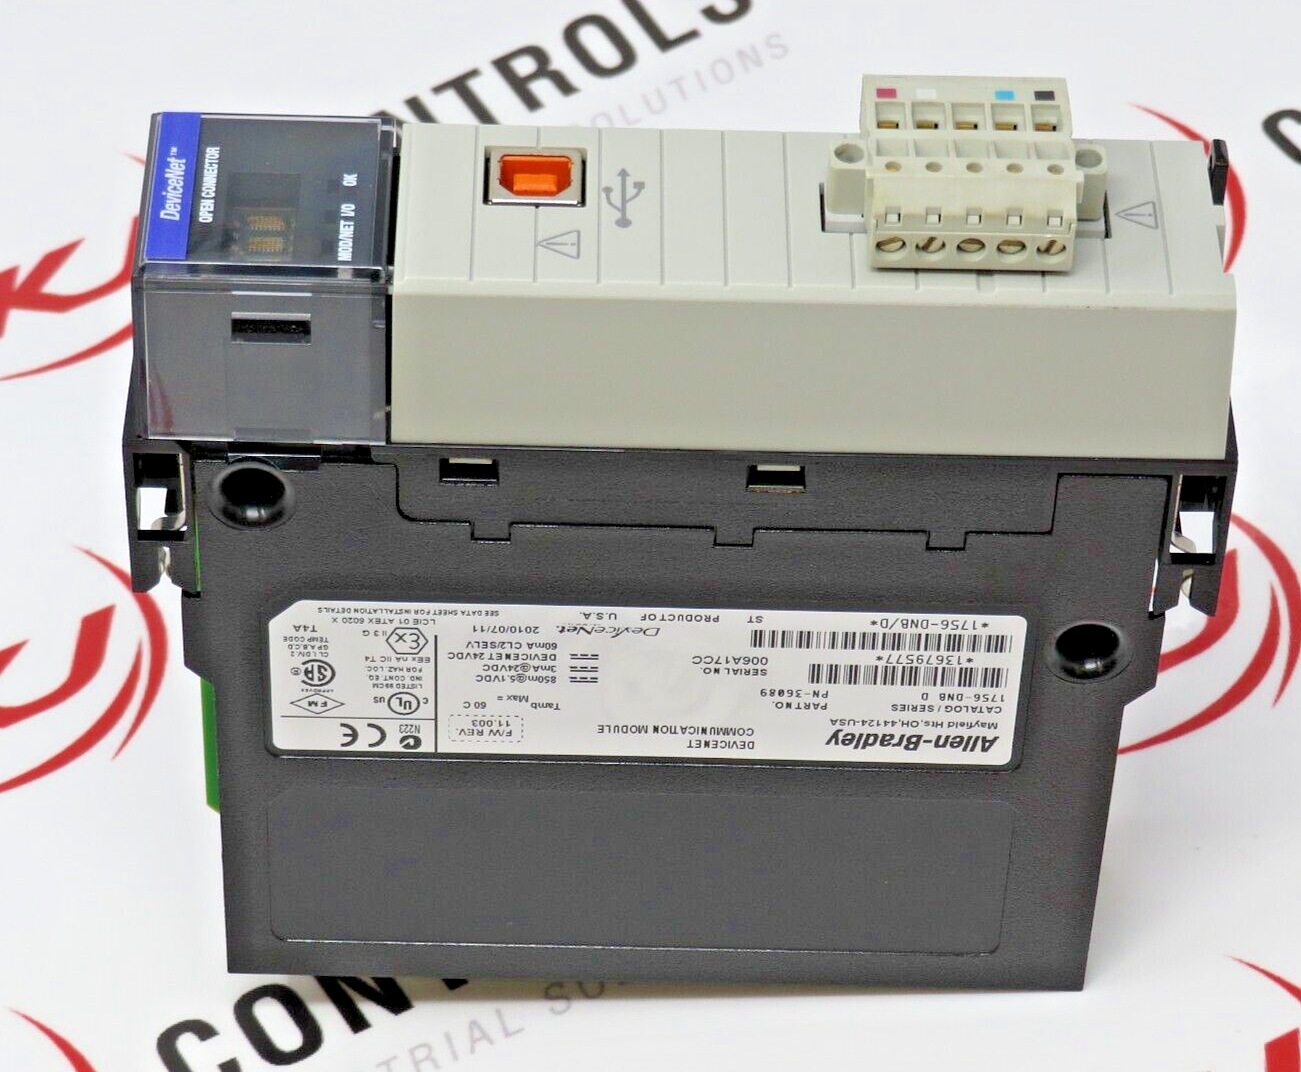 Allen-Bradley 1756-DNB ControlLogix DeviceNet Bridge Scanner Series C / D